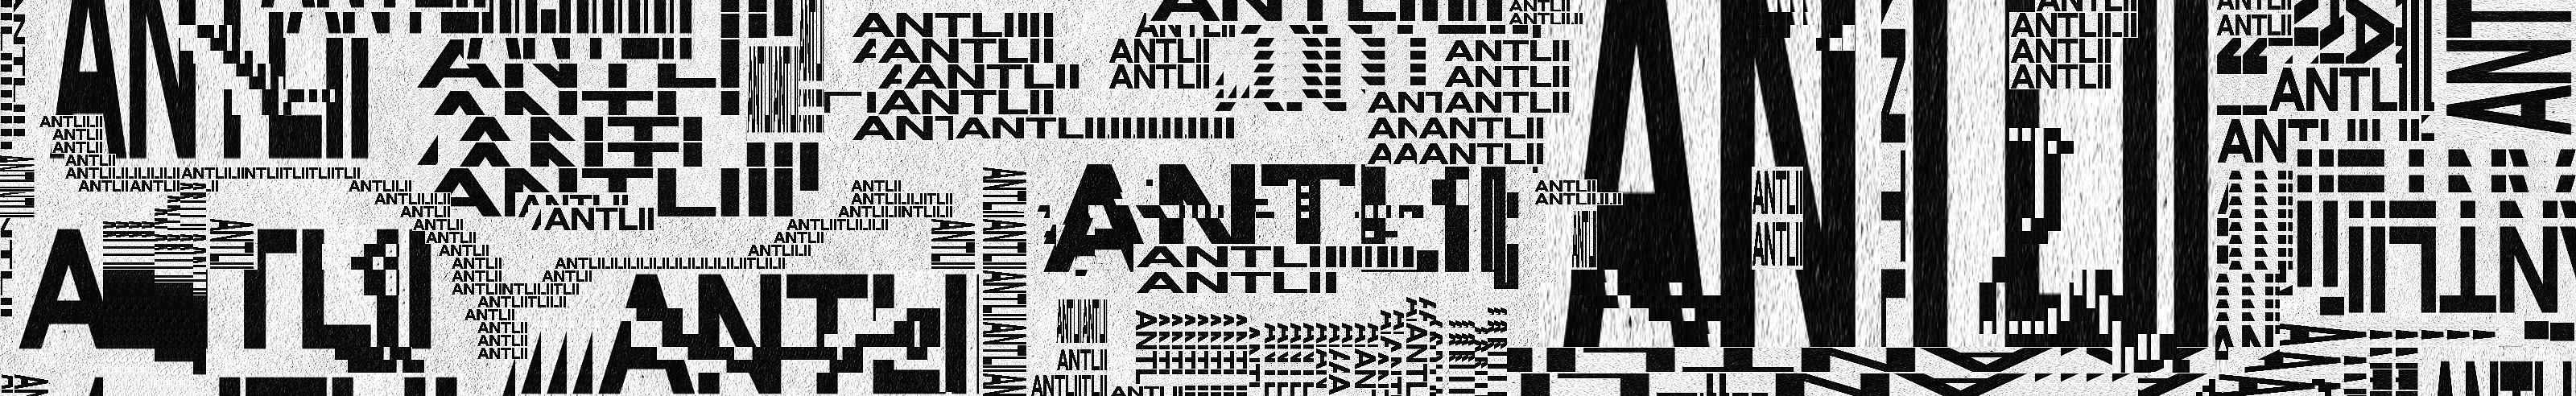 Antlii 🇺🇦's profile banner